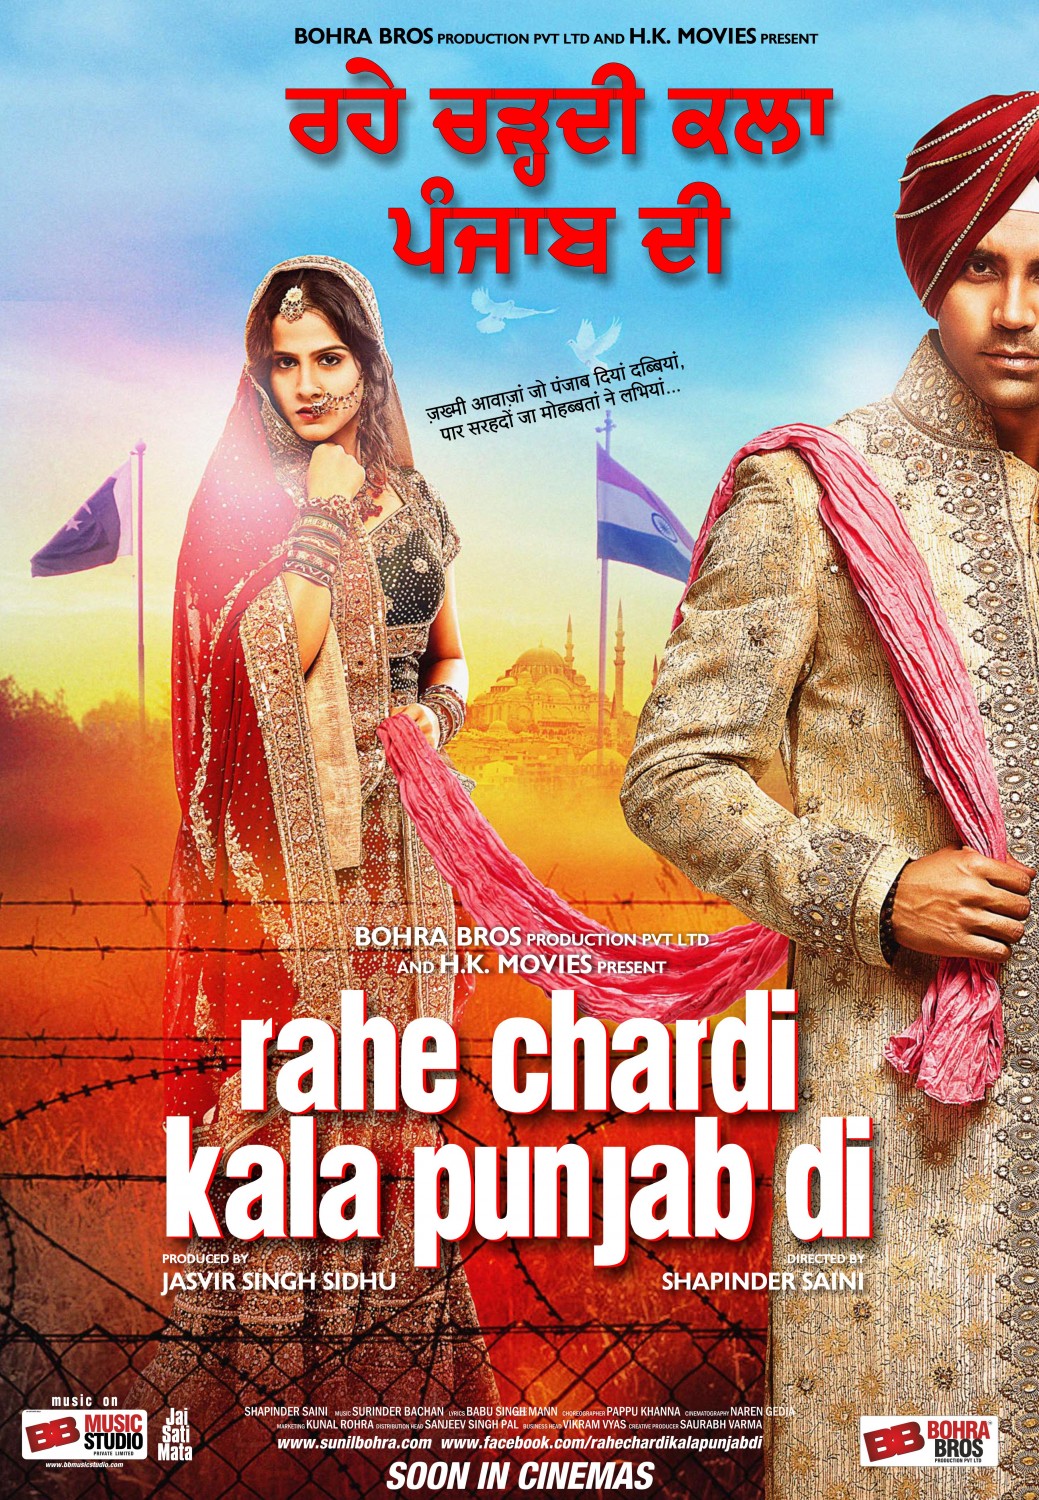 Extra Large Movie Poster Image for Rahe Chardi Kala Punjab Di (#1 of 3)